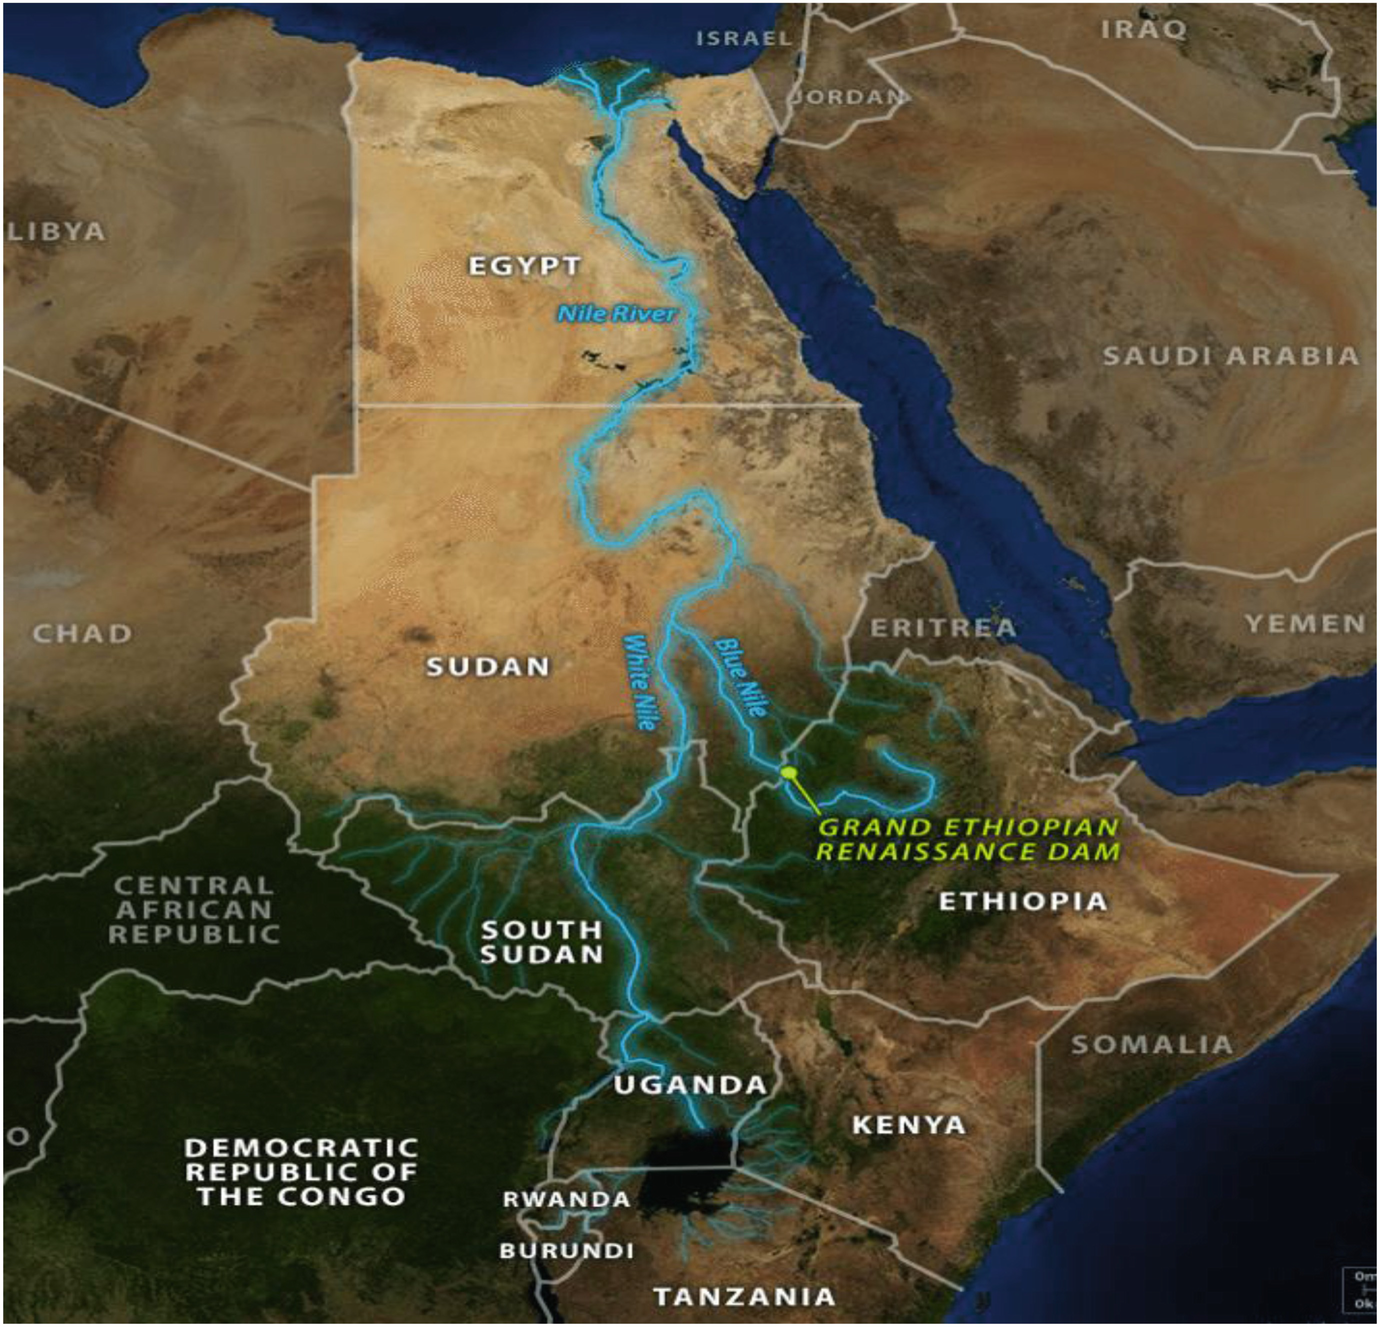 Nile valley civilizations pdf 2017